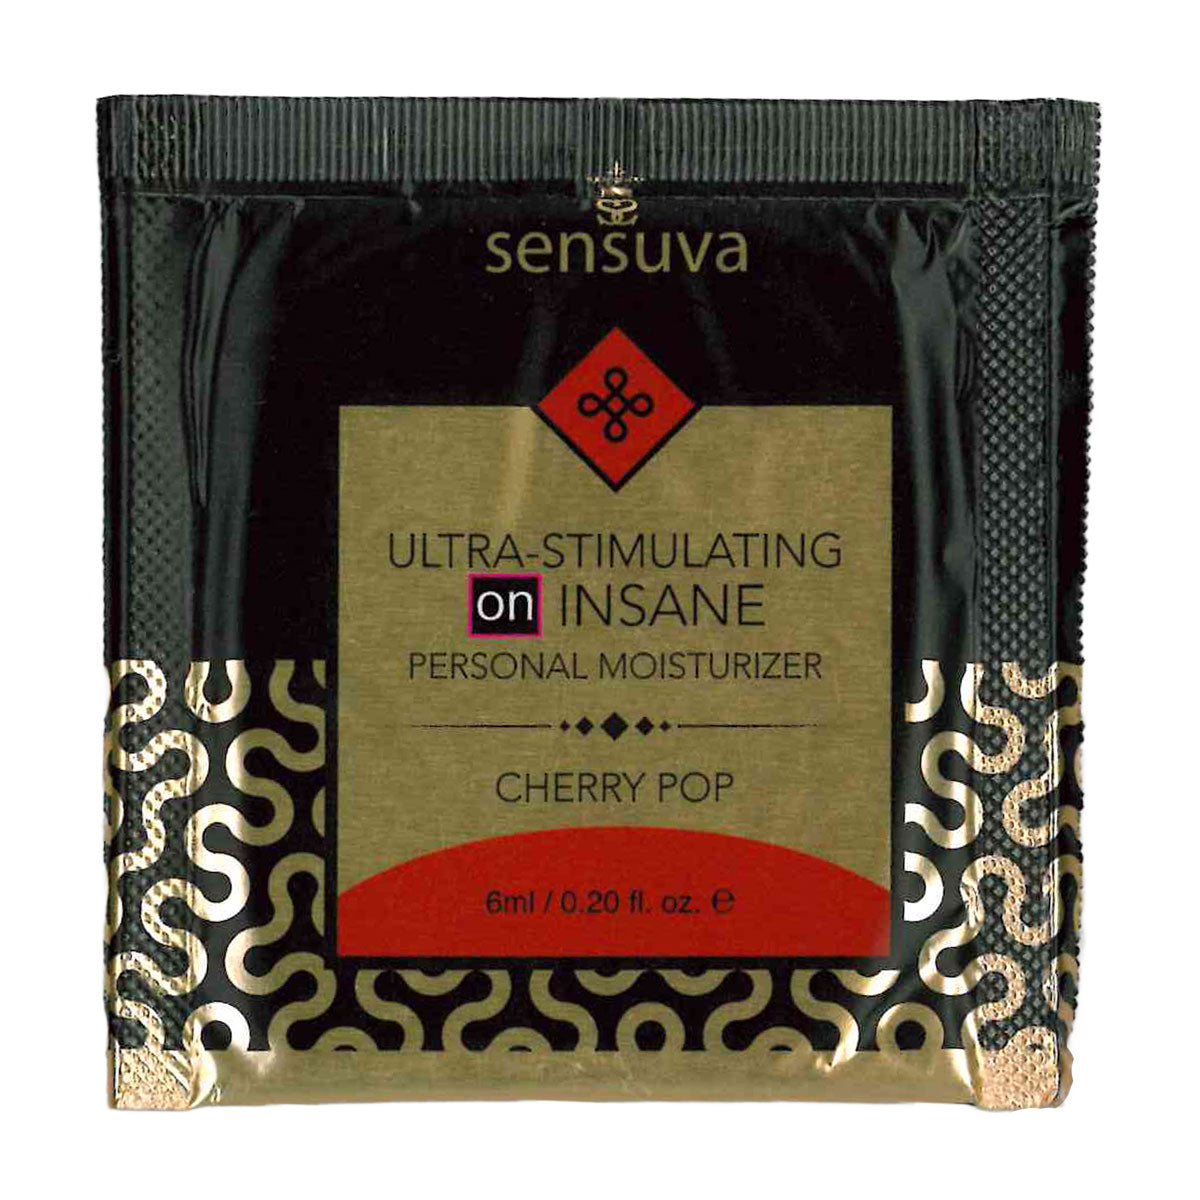 Sensuva – Ultra-Stimulating ON INSANE - Cherry Pop - Foil 6ml/0.20 fl oz.